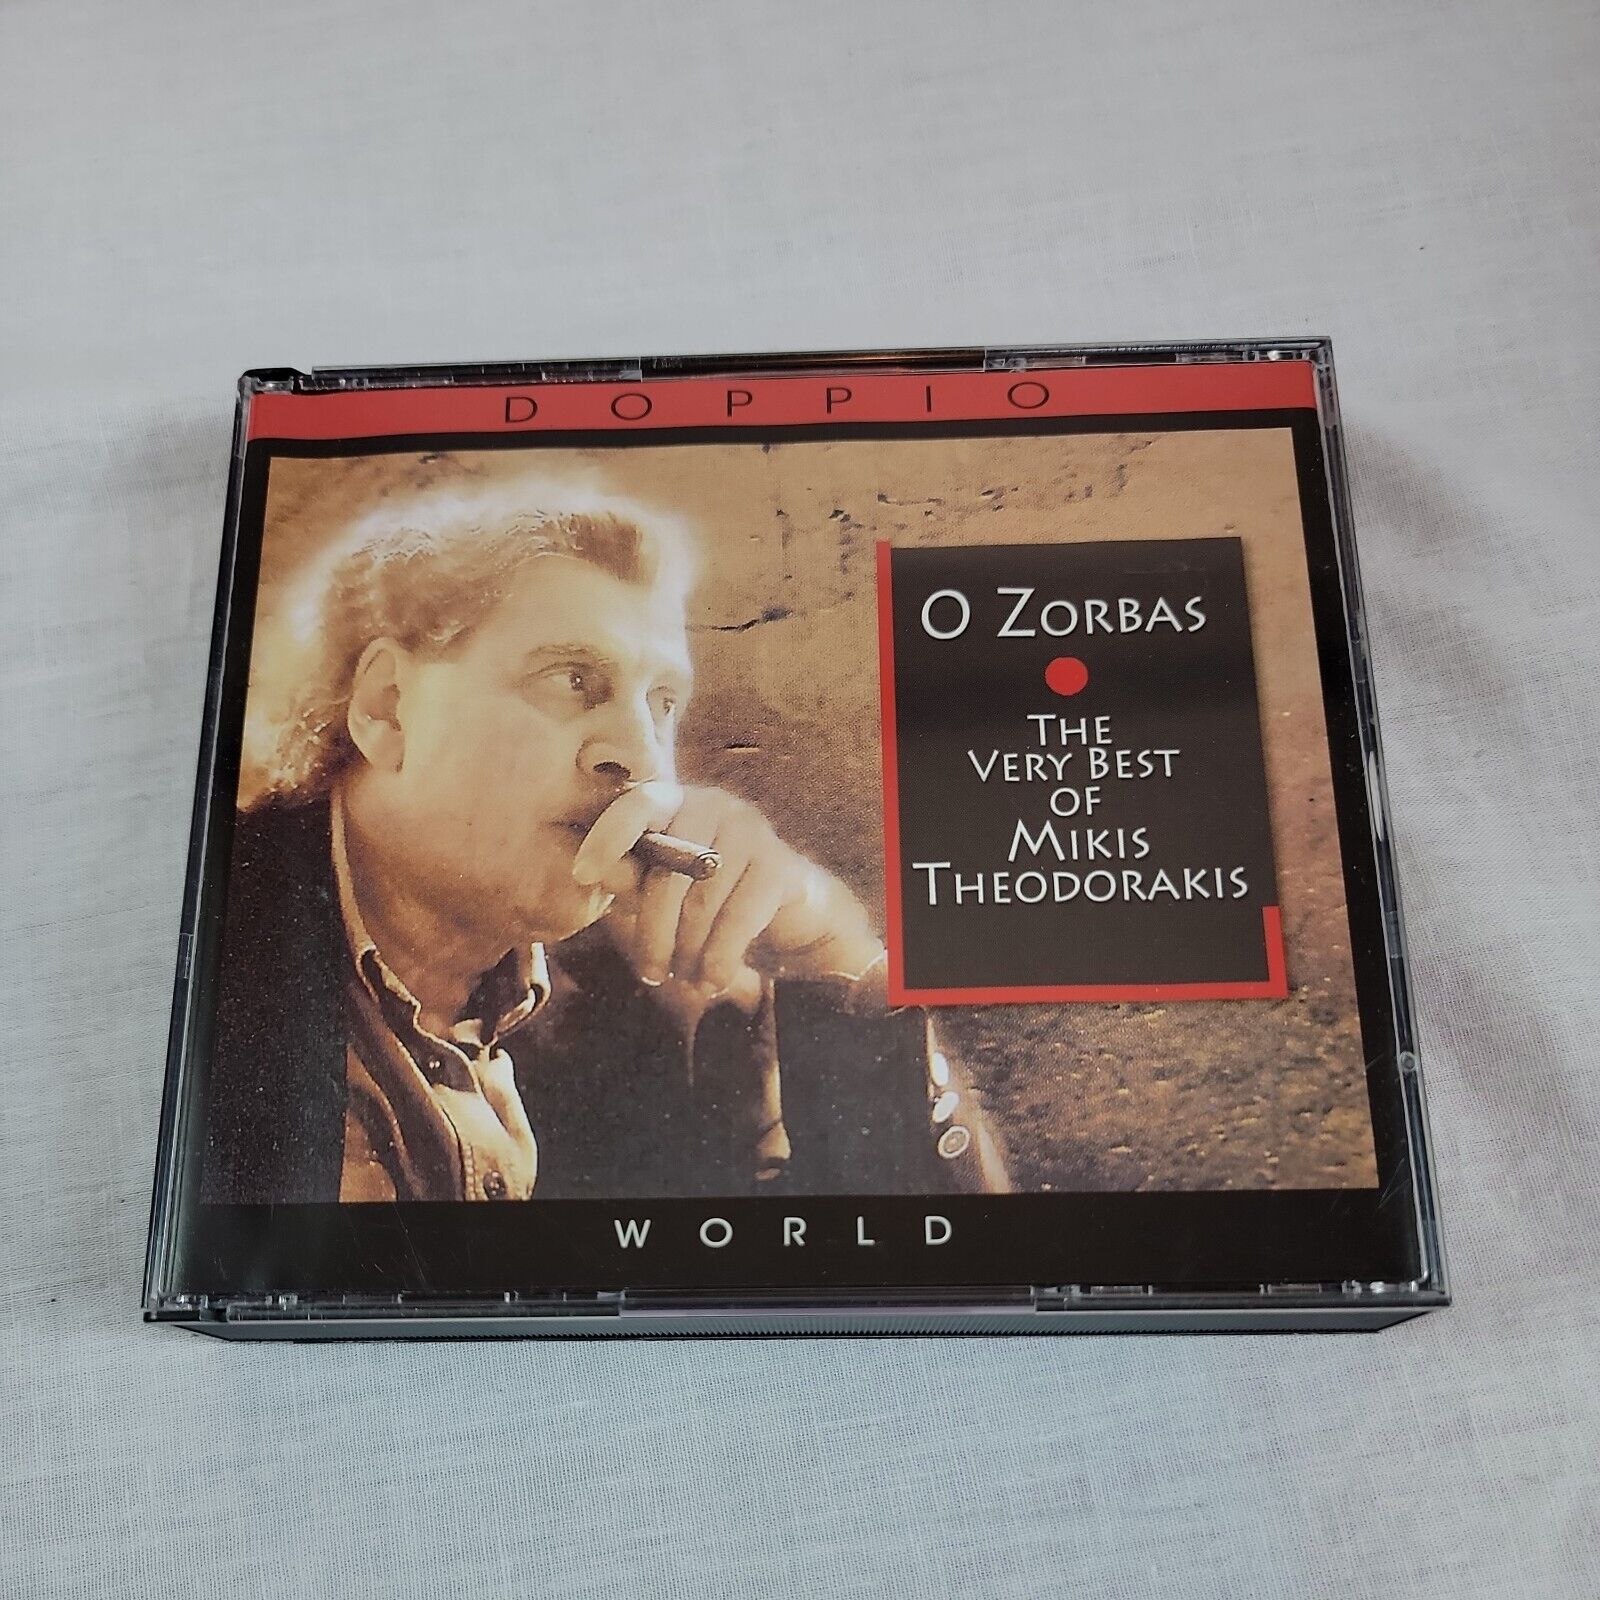 MIKIS THEODORAKIS - O Zorbas: Very Best Of Mikis Theodorakis - CD - Mint